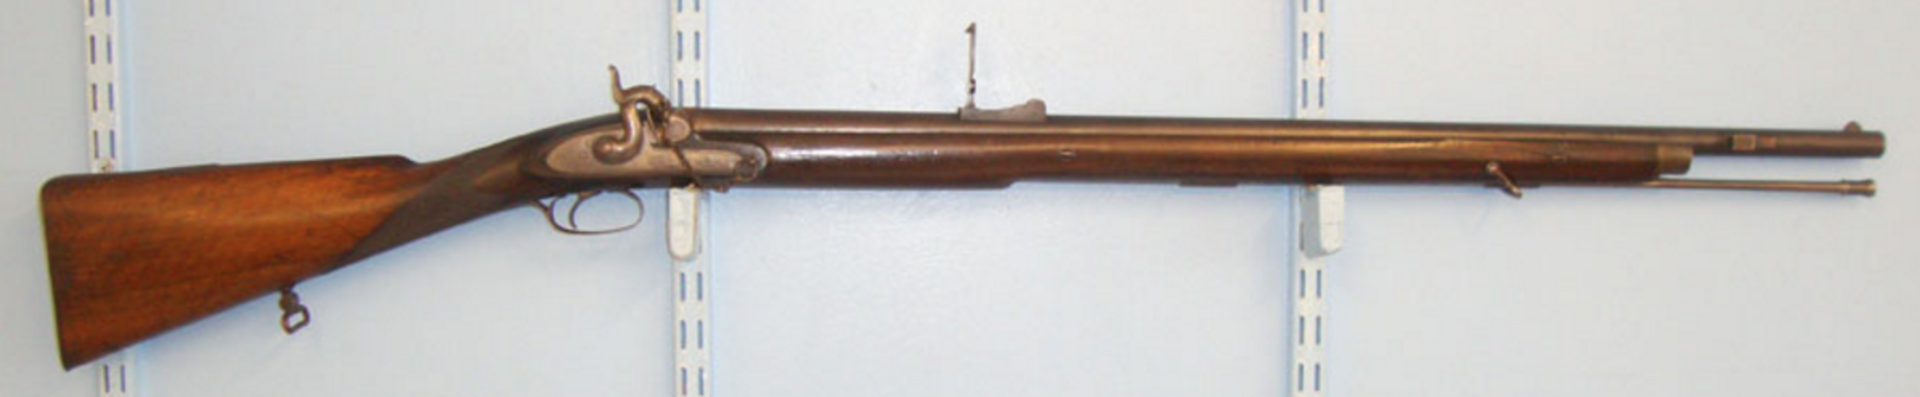 Victorian British Volunteer/Militia Sgt’s/NCO’s Private Purchase 577 Calibre Percussion Short Rifle - Image 2 of 3